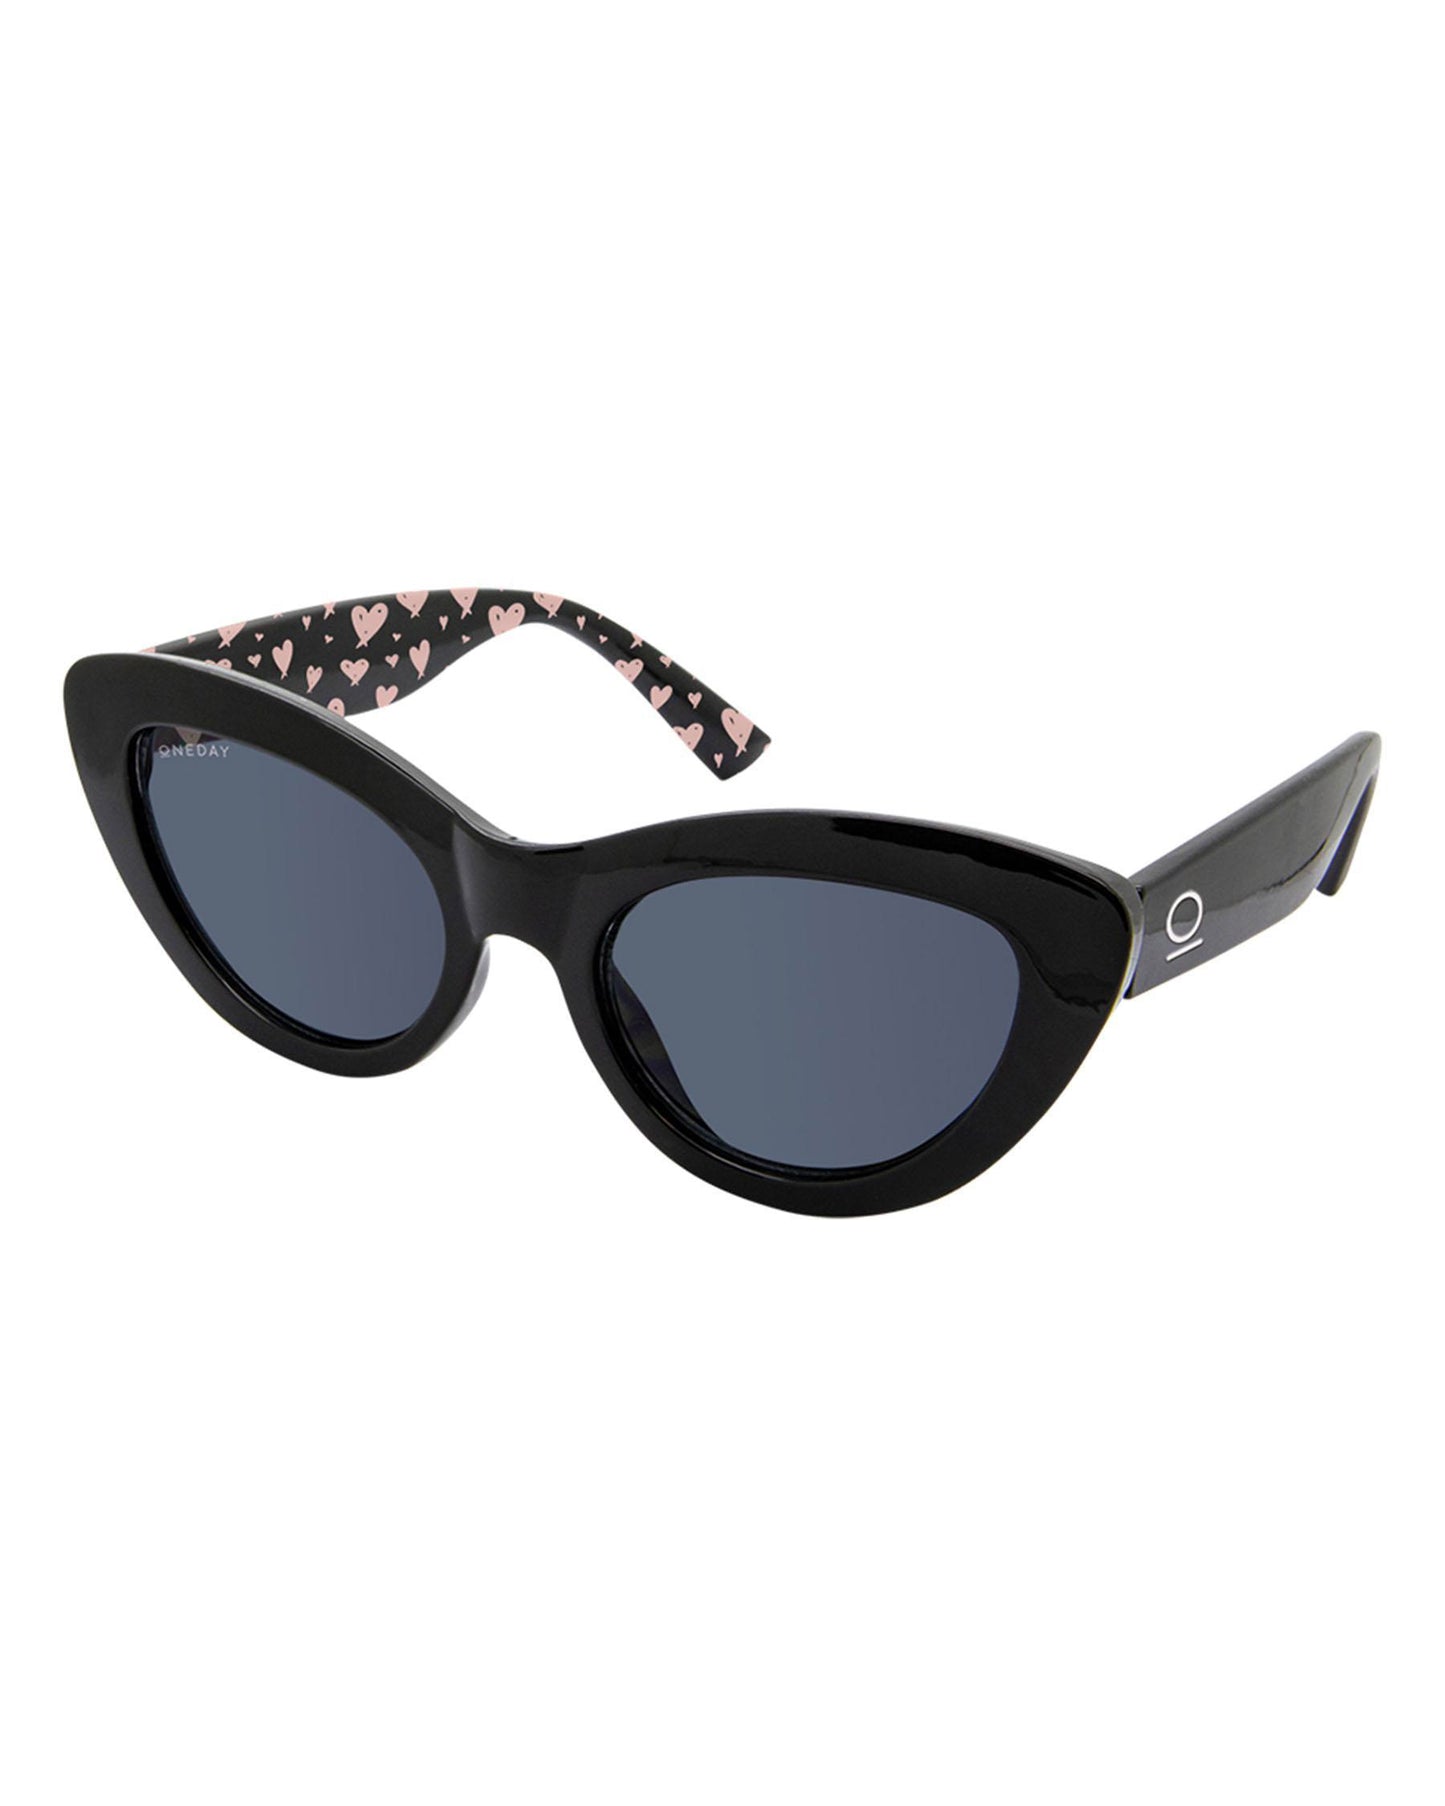 ONEDAY French Kiss Sunglasses - Black/Smoke